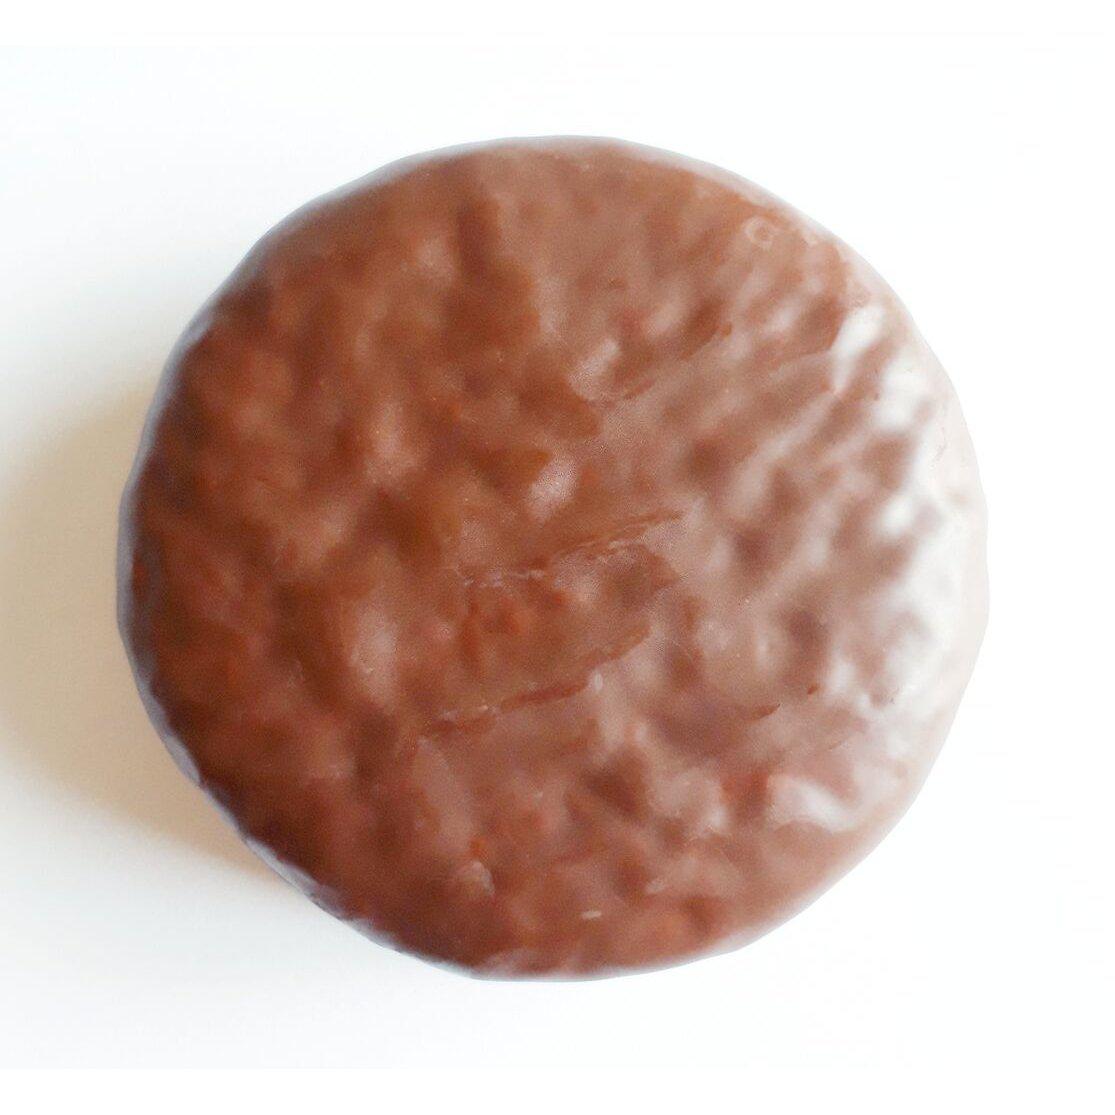 Lotte, Choco Pie, Nama Cream Tiramisu, 1pc in 1 bag, Mini size, 37g